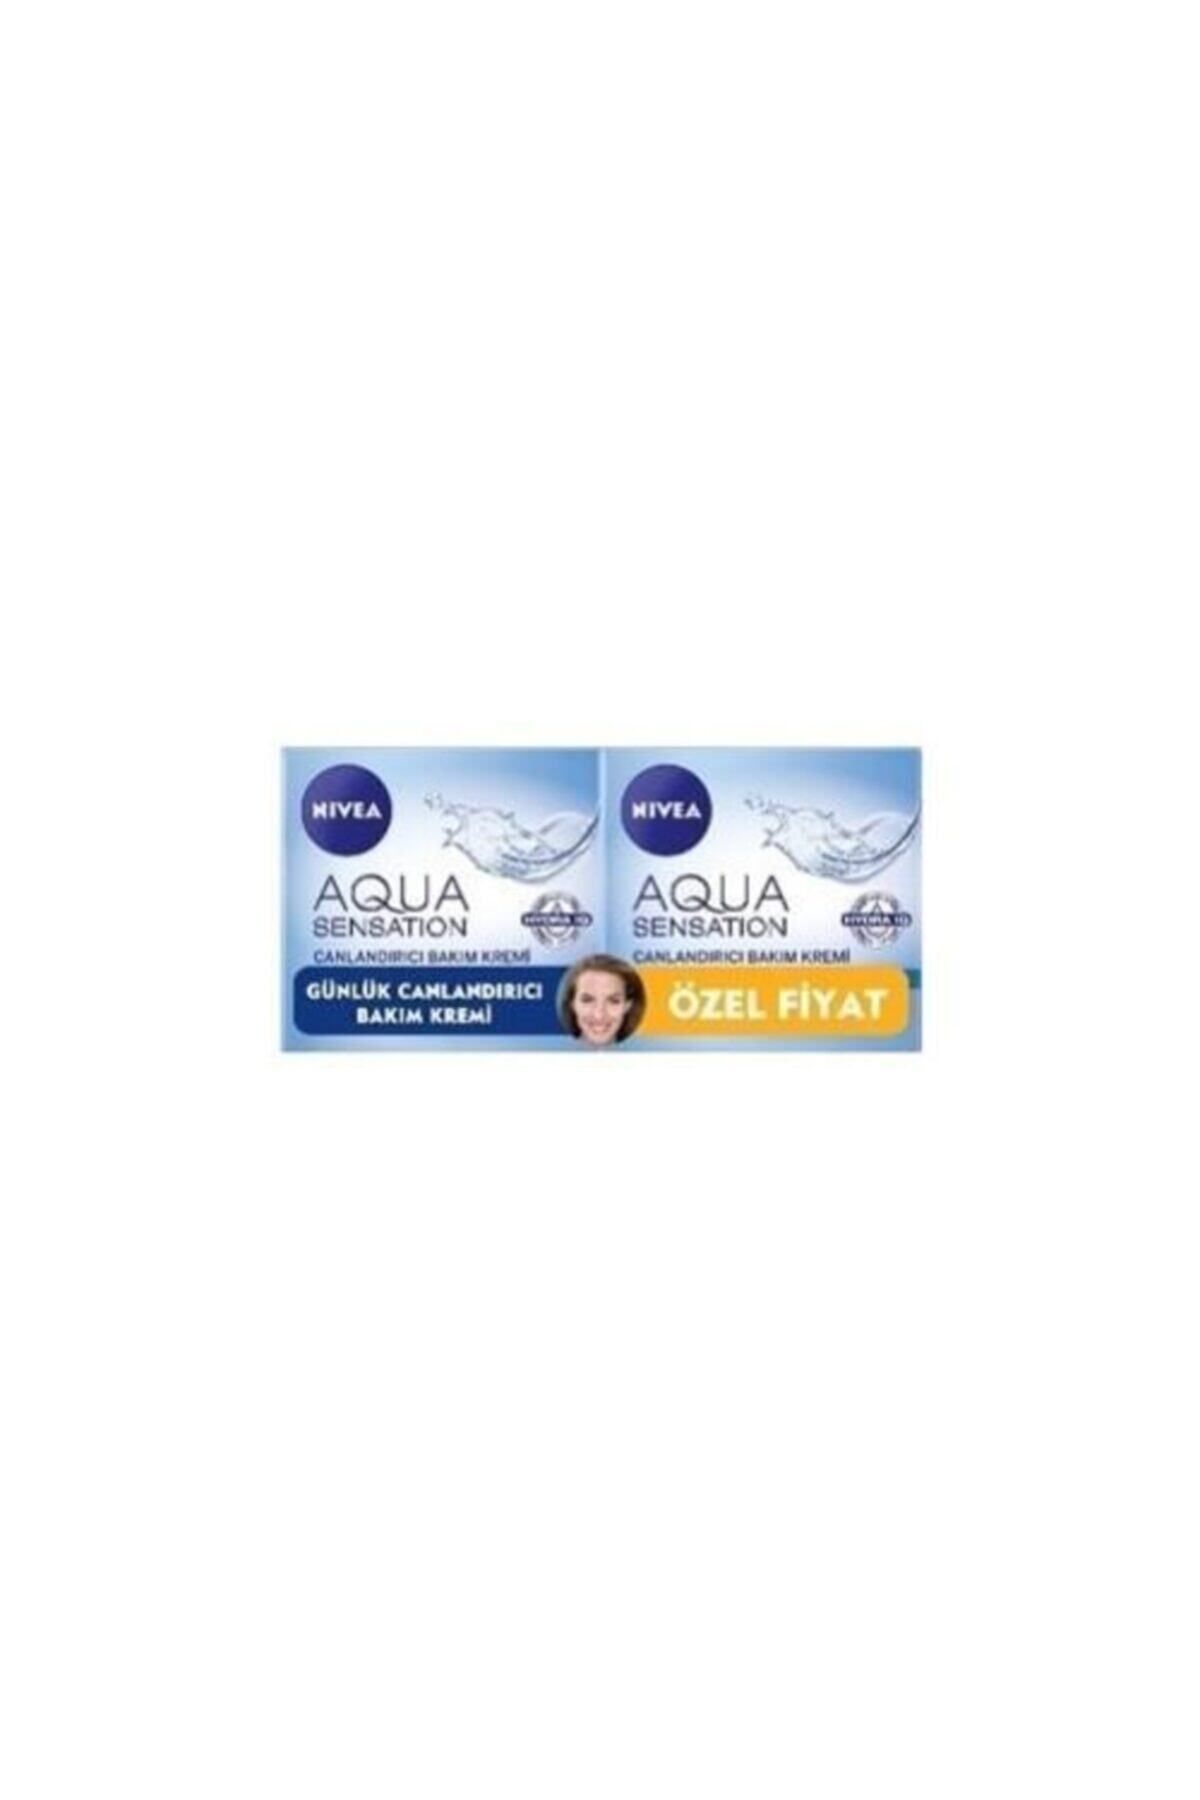 NIVEA Aqua Sensation Revitalizing Care Cream 50ml